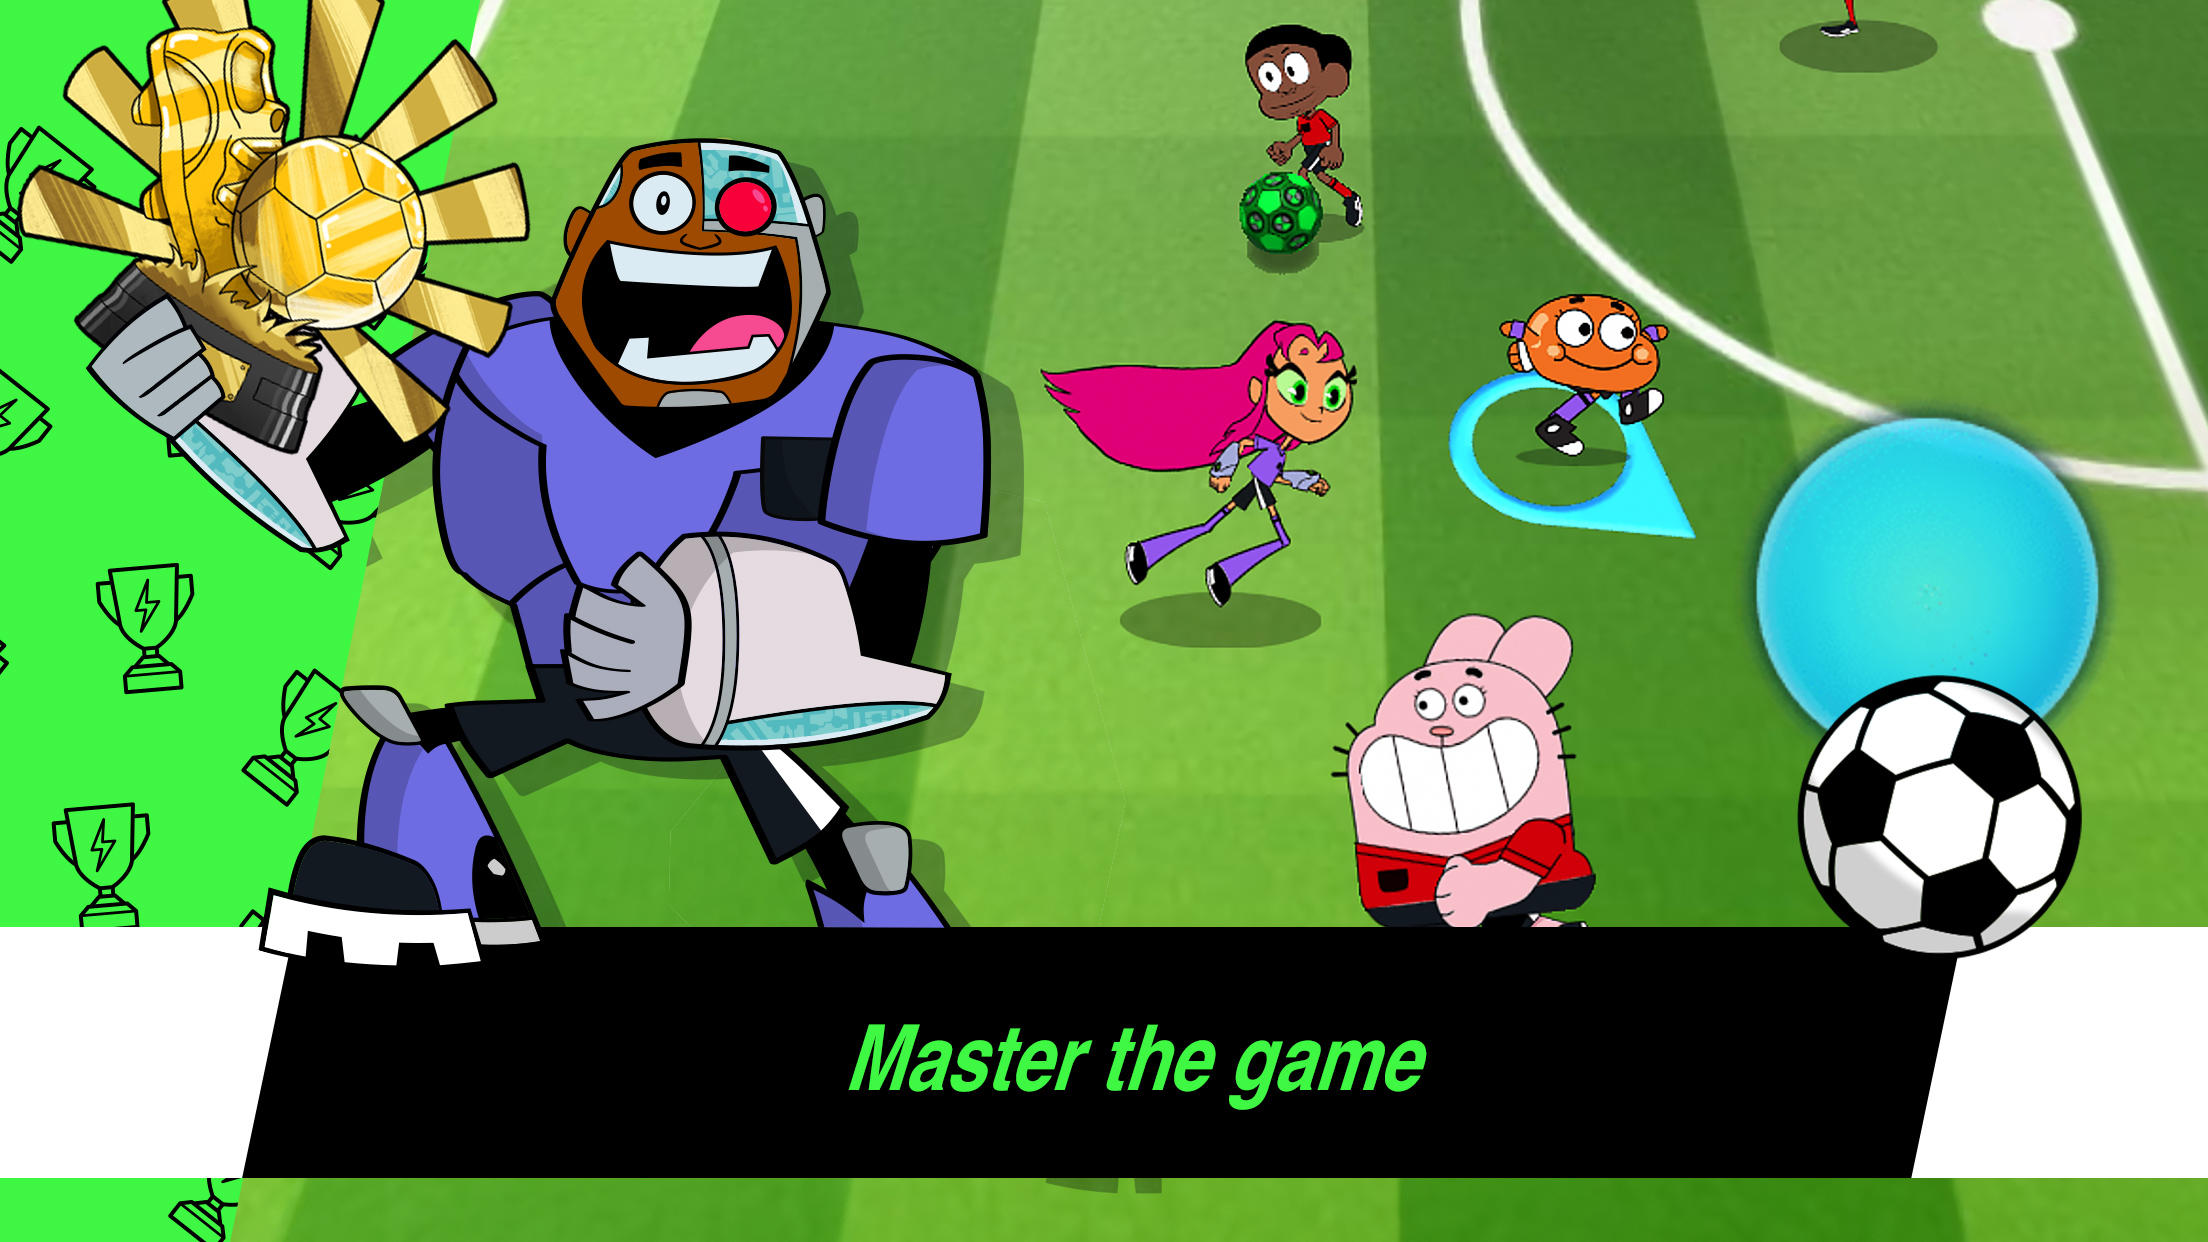 Screenshot of Toon Cup - Football Game